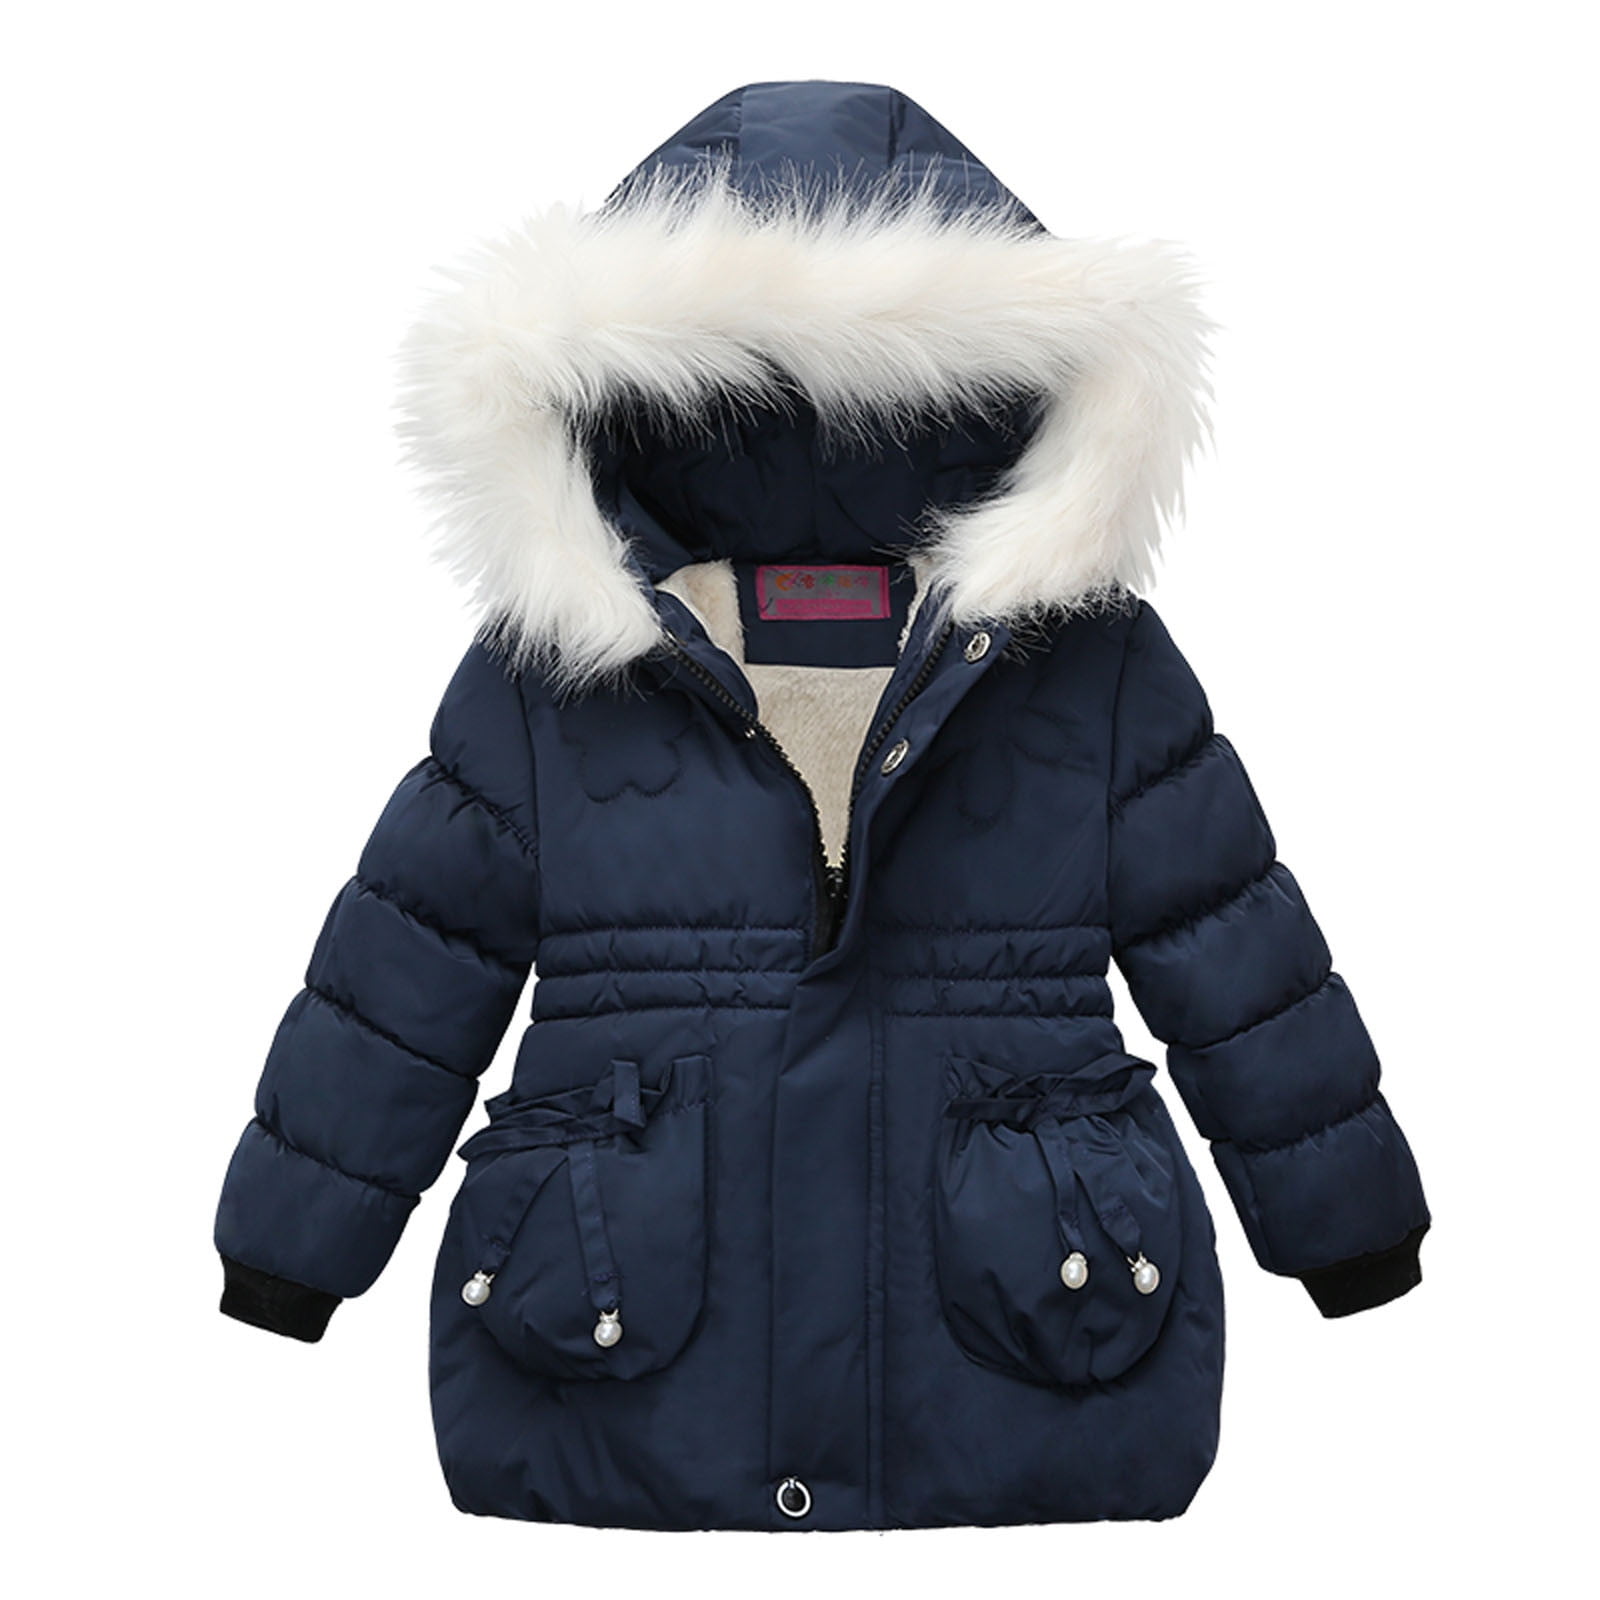 Toddler Baby Girls Long Sleeve Winter Warm Solid Windproof Coat Outwear Jacket 